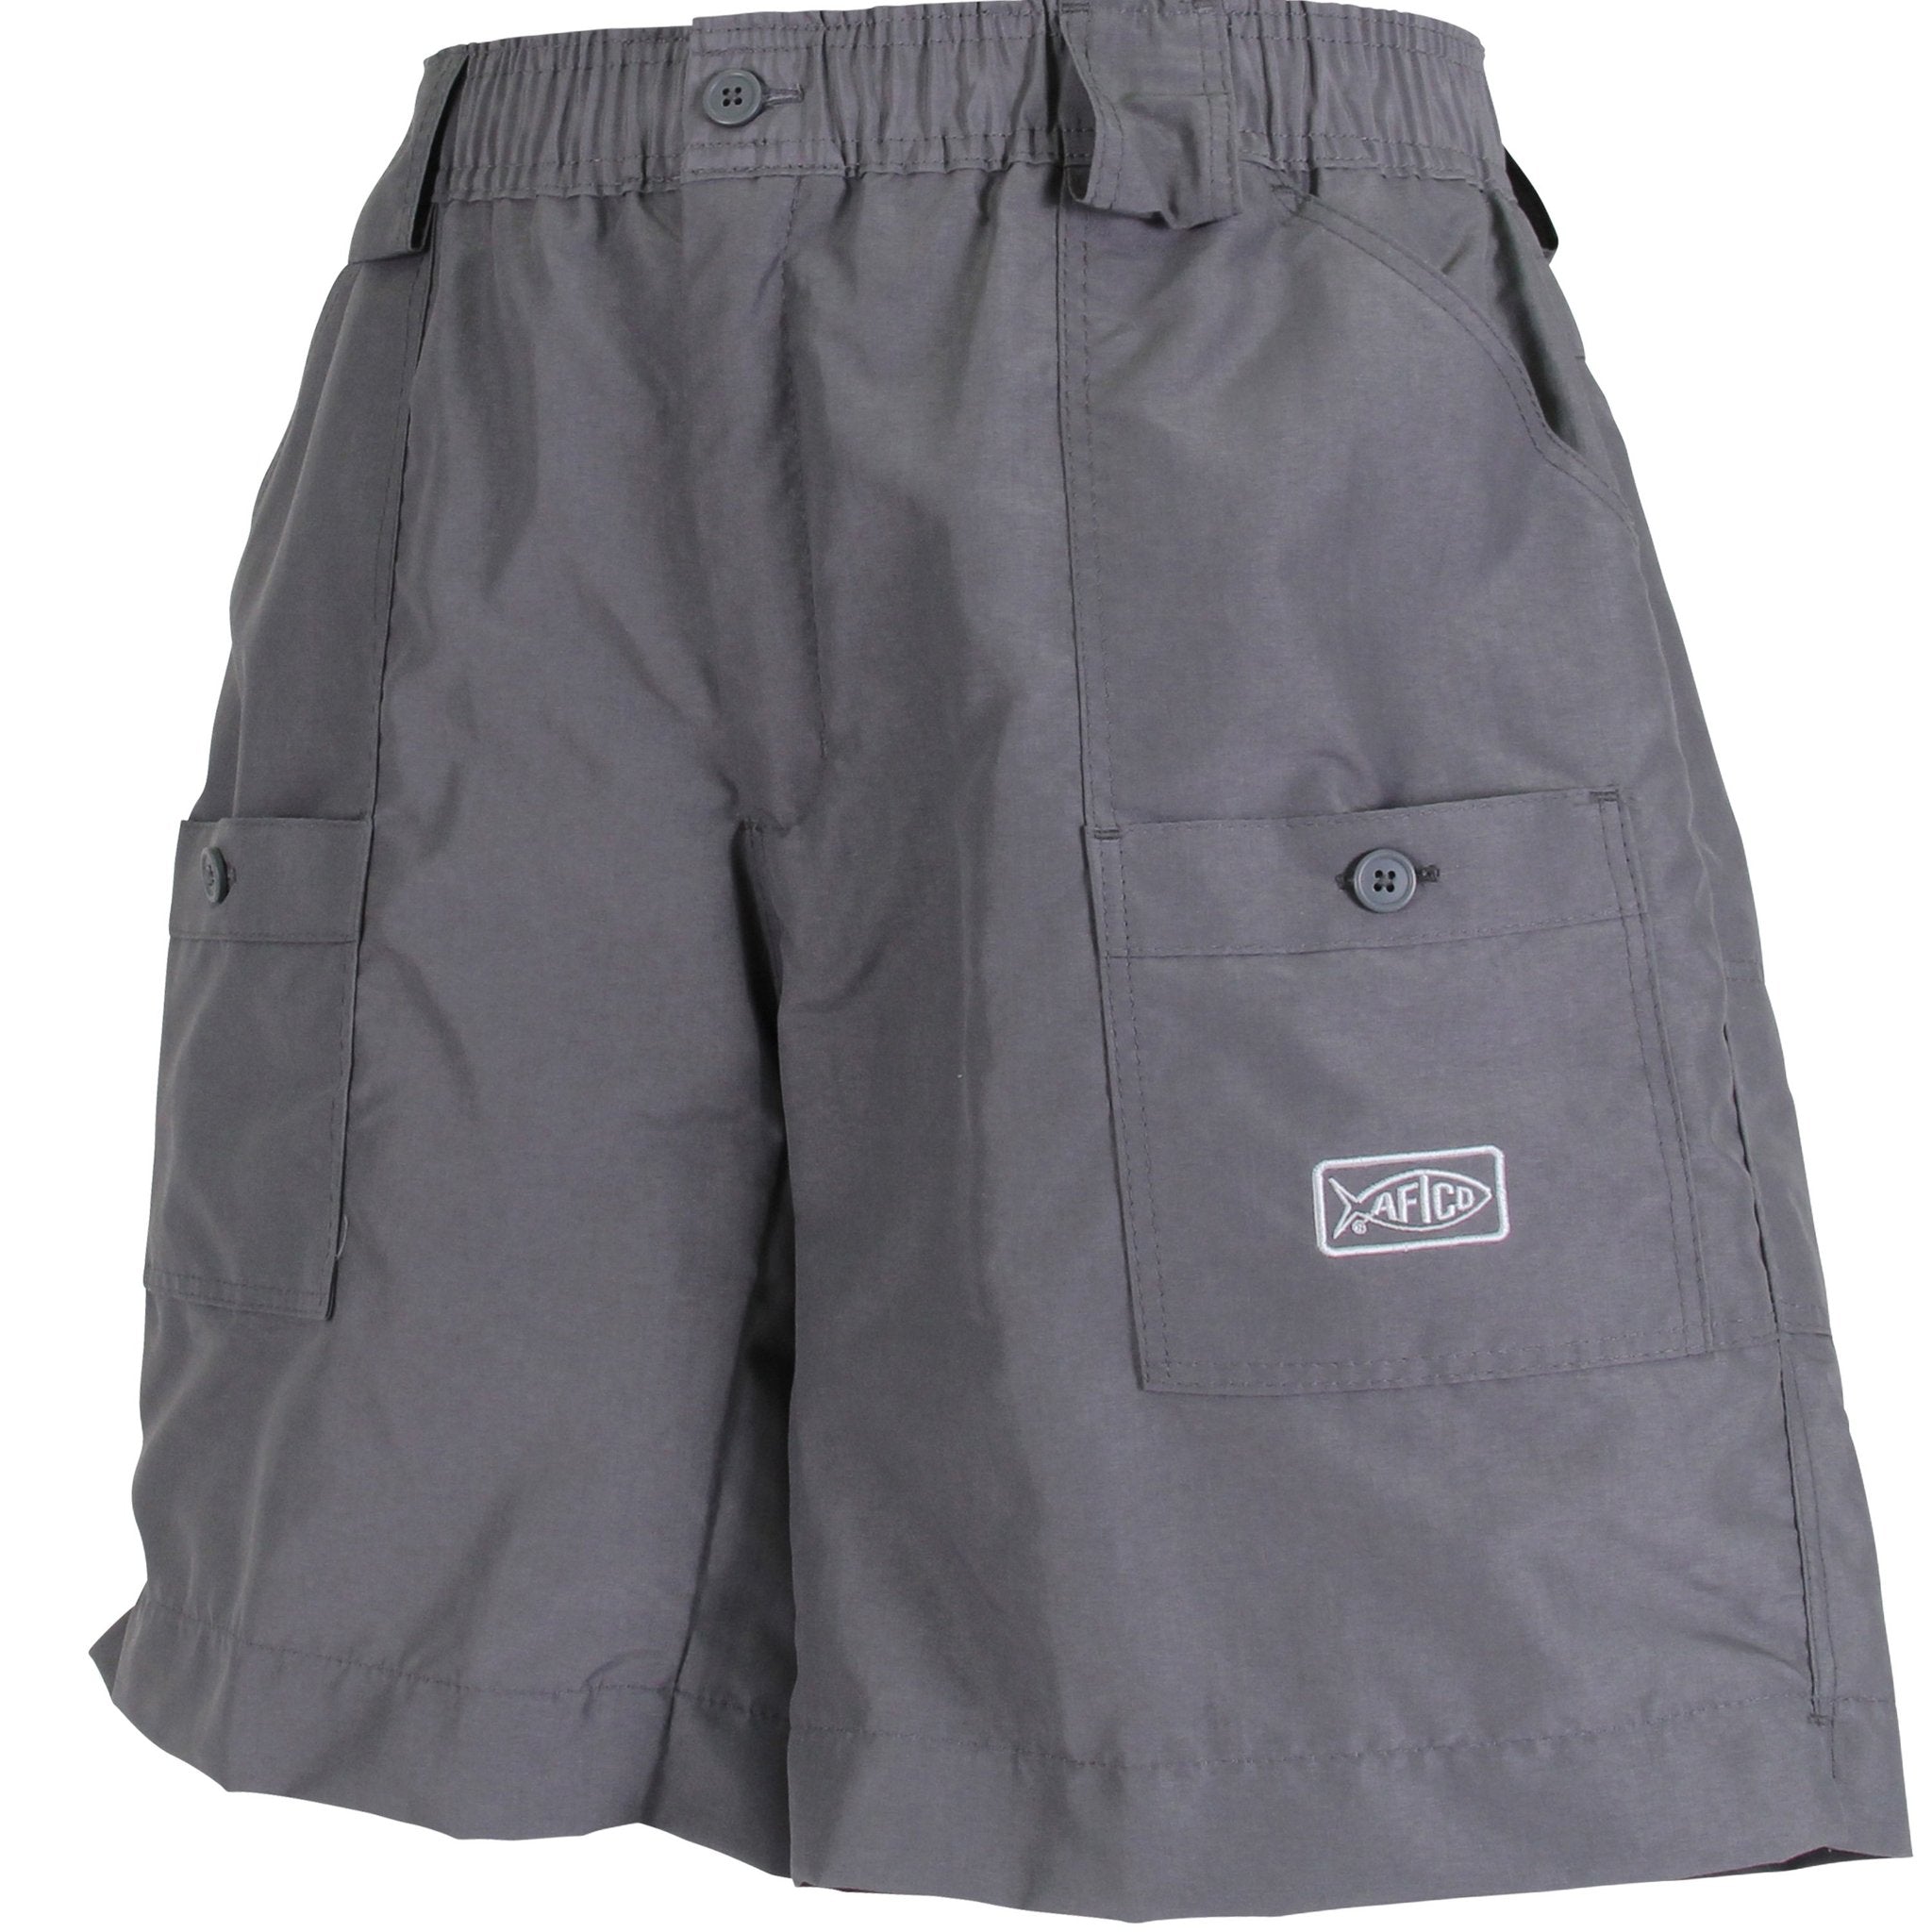 AFTCO Shorts - M01 Fishing Shorts - Melton Tackle - Melton Tackle